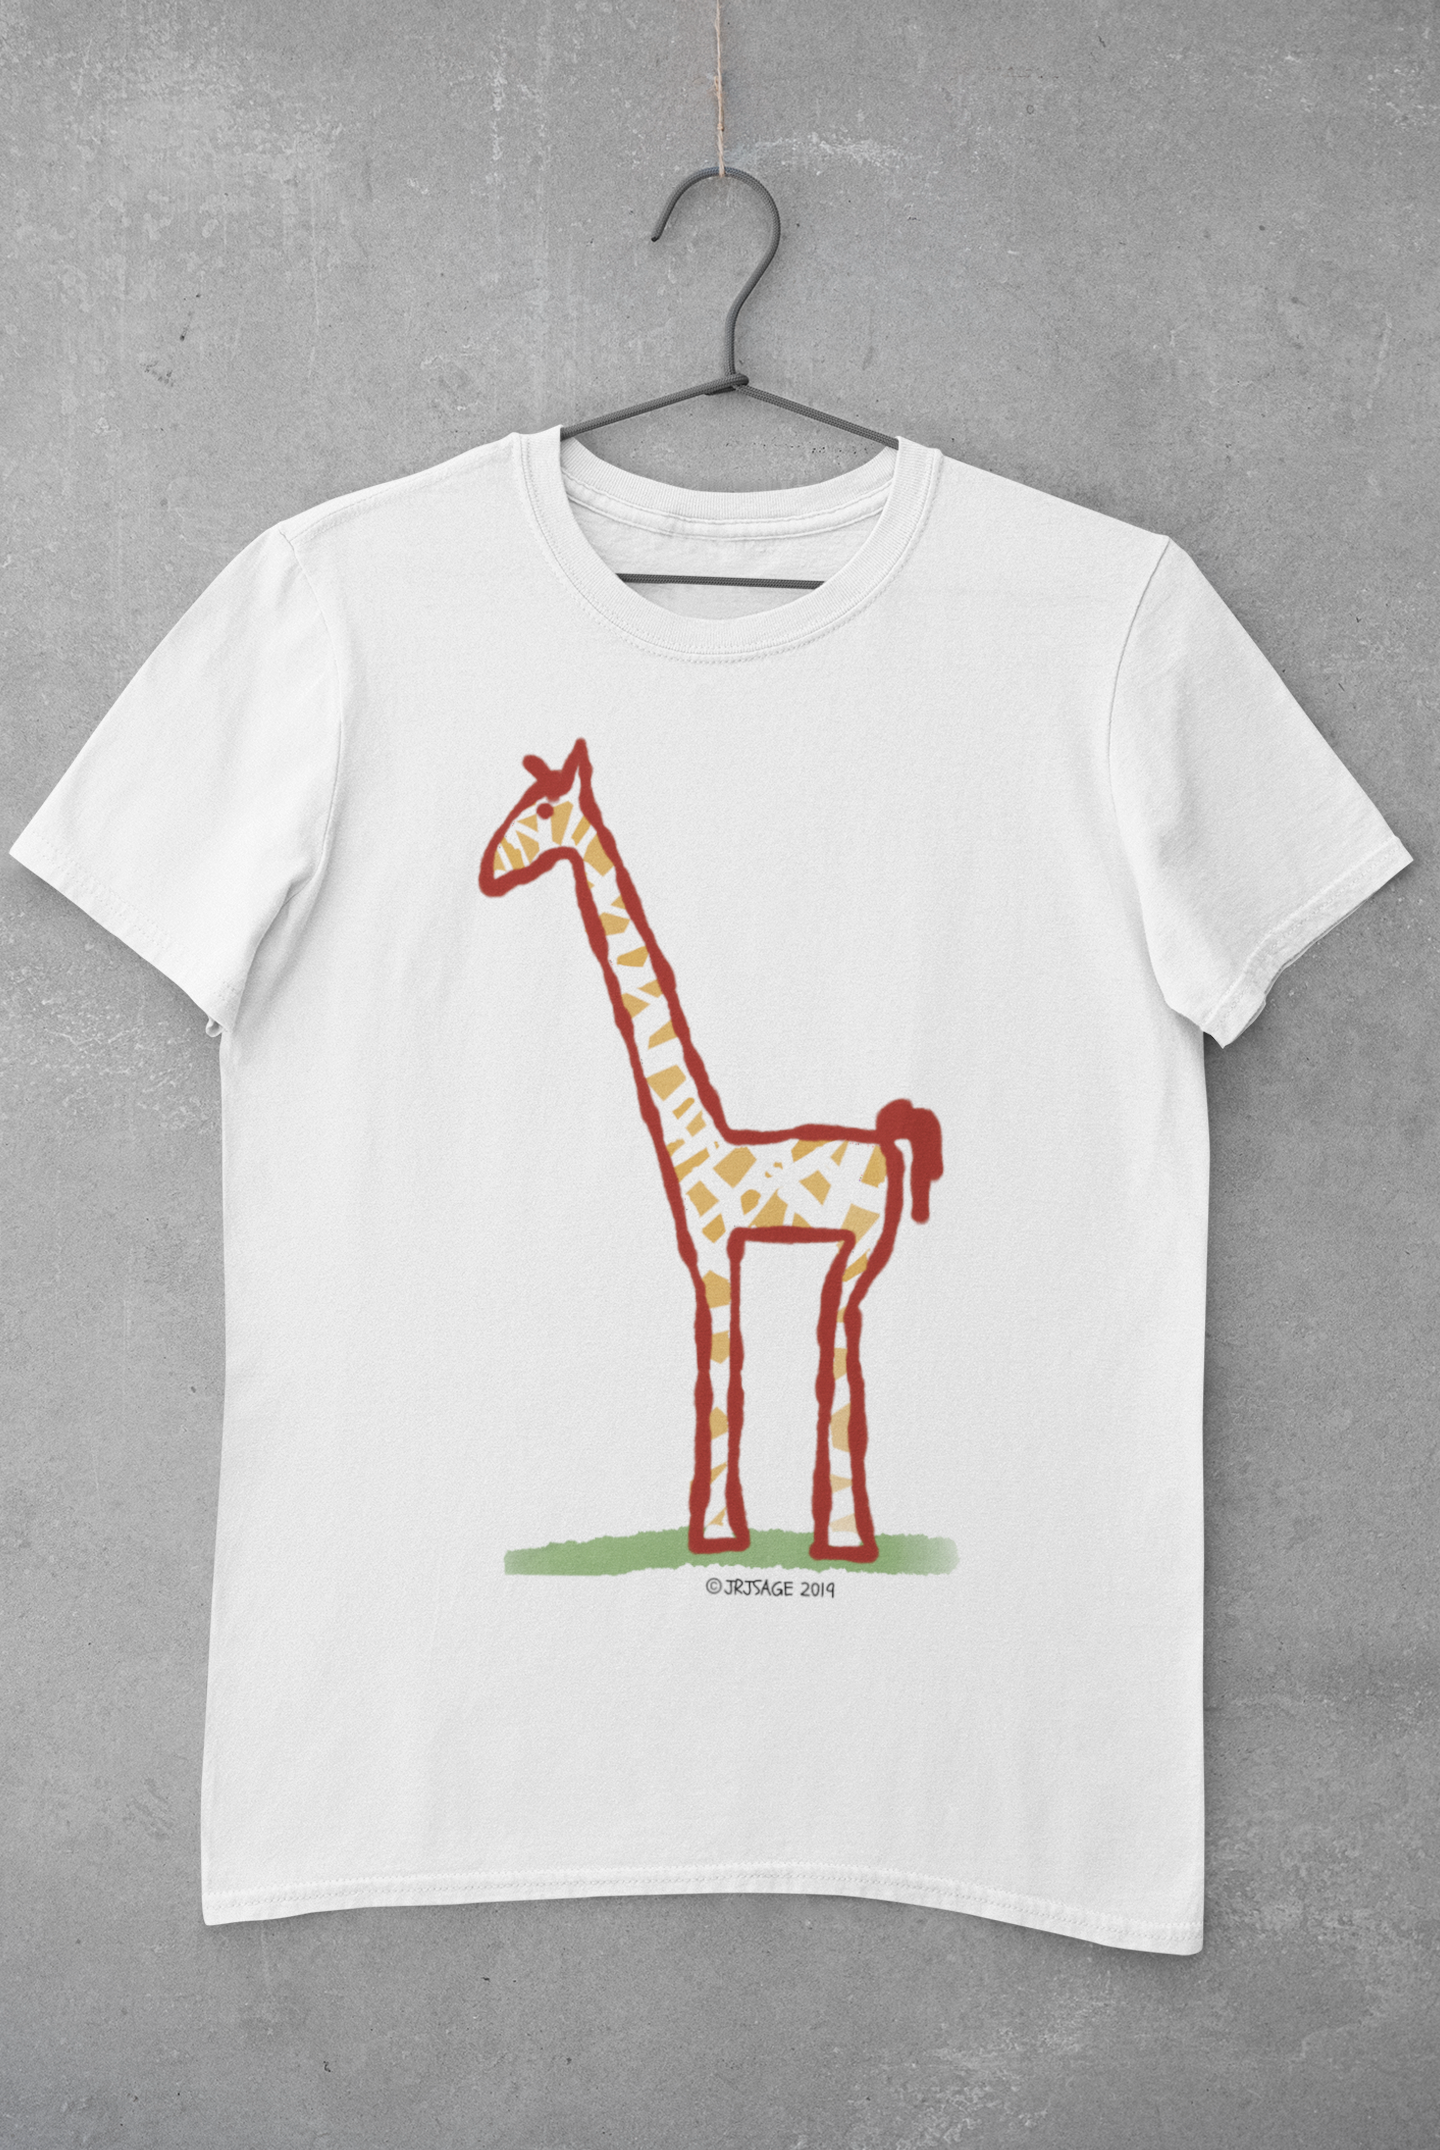 Giraffe t-shirt - Illustrated Jeffrey Giraffe white vegan cotton t-shirts by Hector and Bone